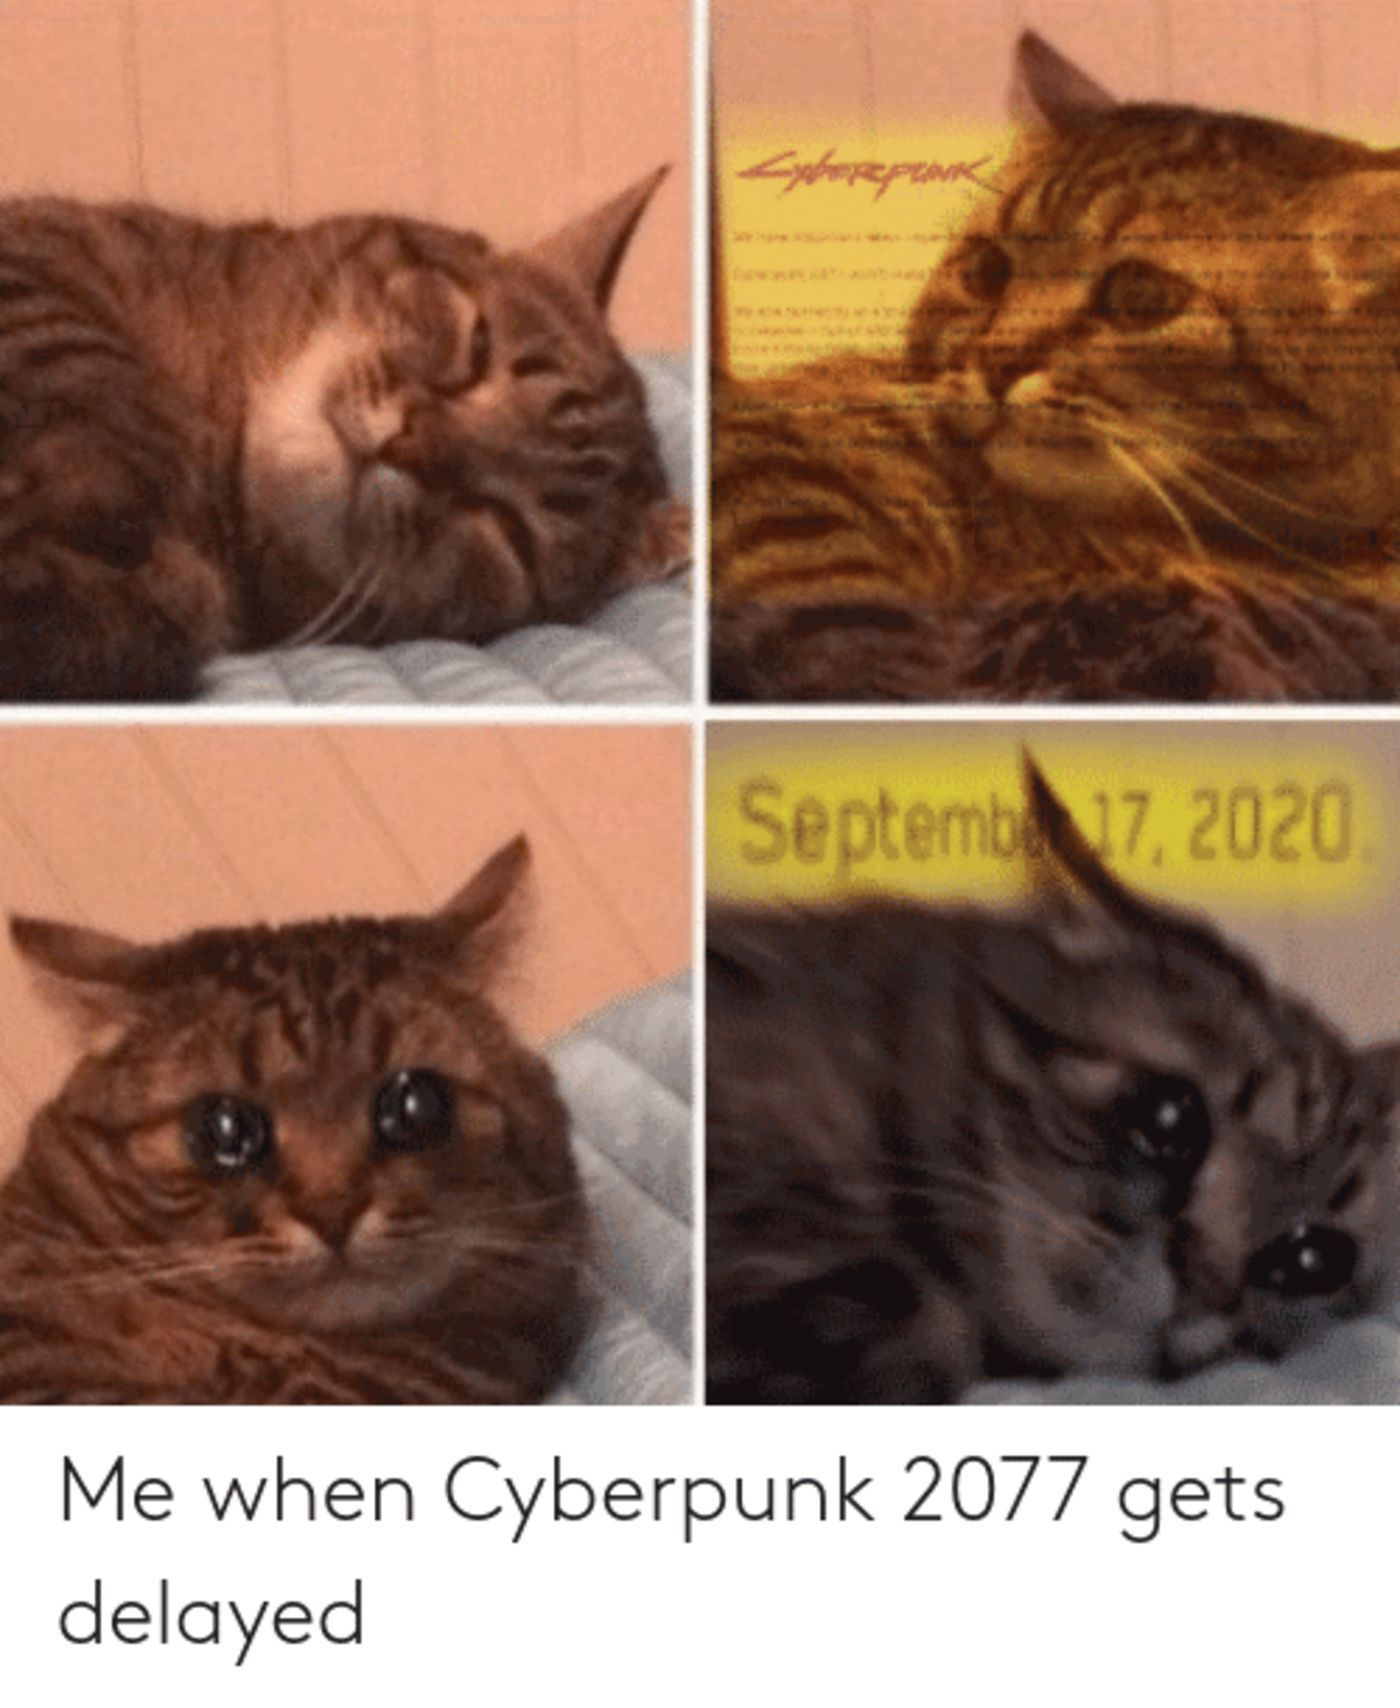 Sad cat meme about Cyberpunk 2077 getting delayed